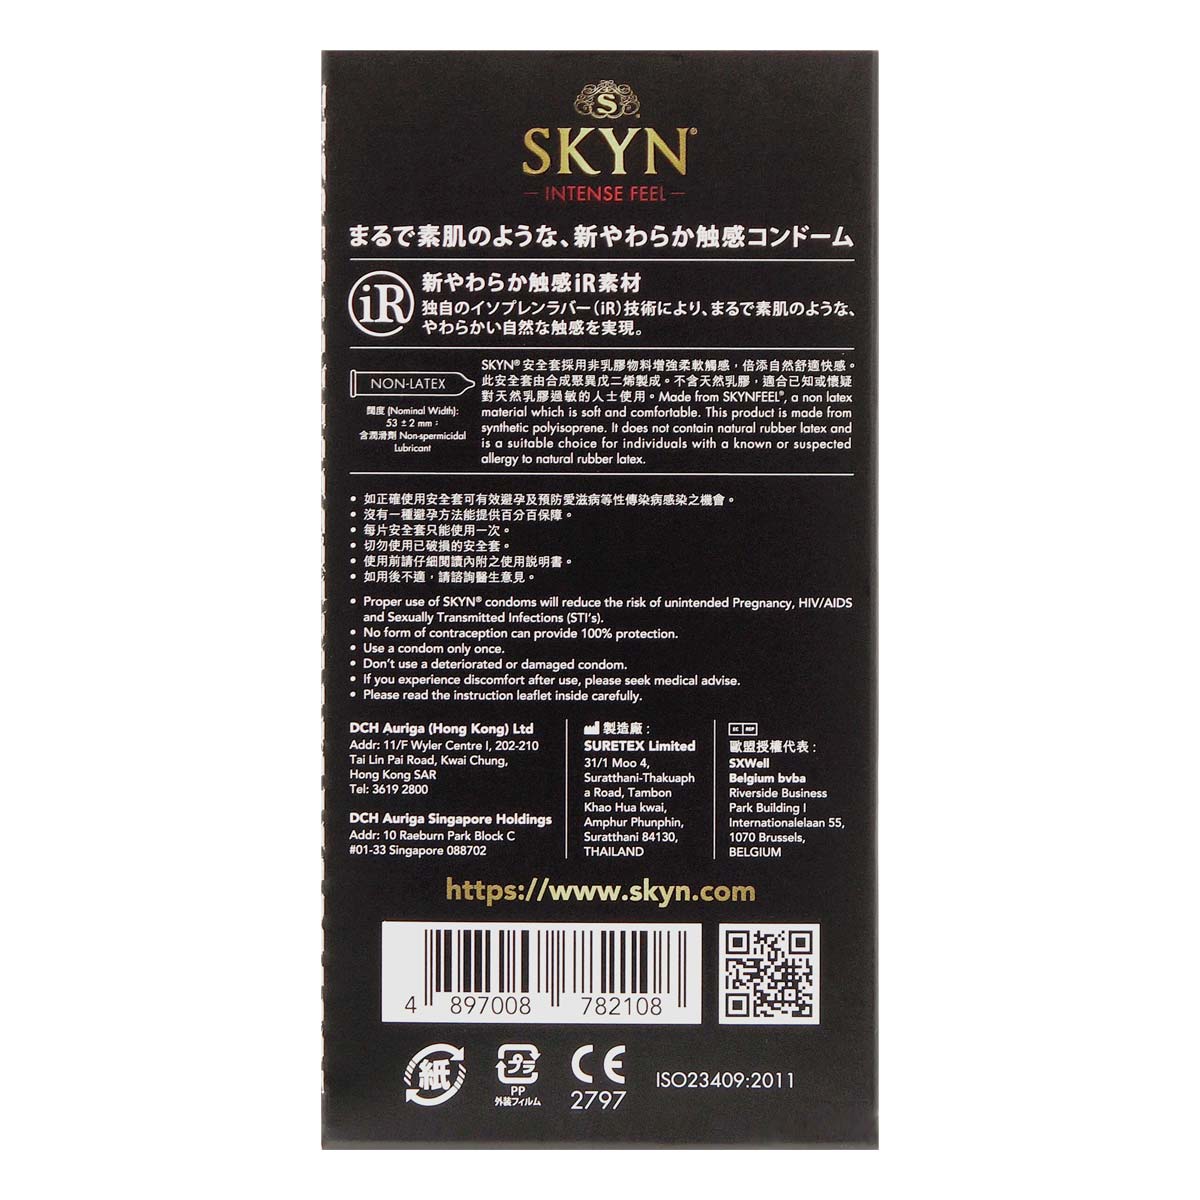 SKYN Intense Feel 系列 iR 安全套 10 片裝 -p_3